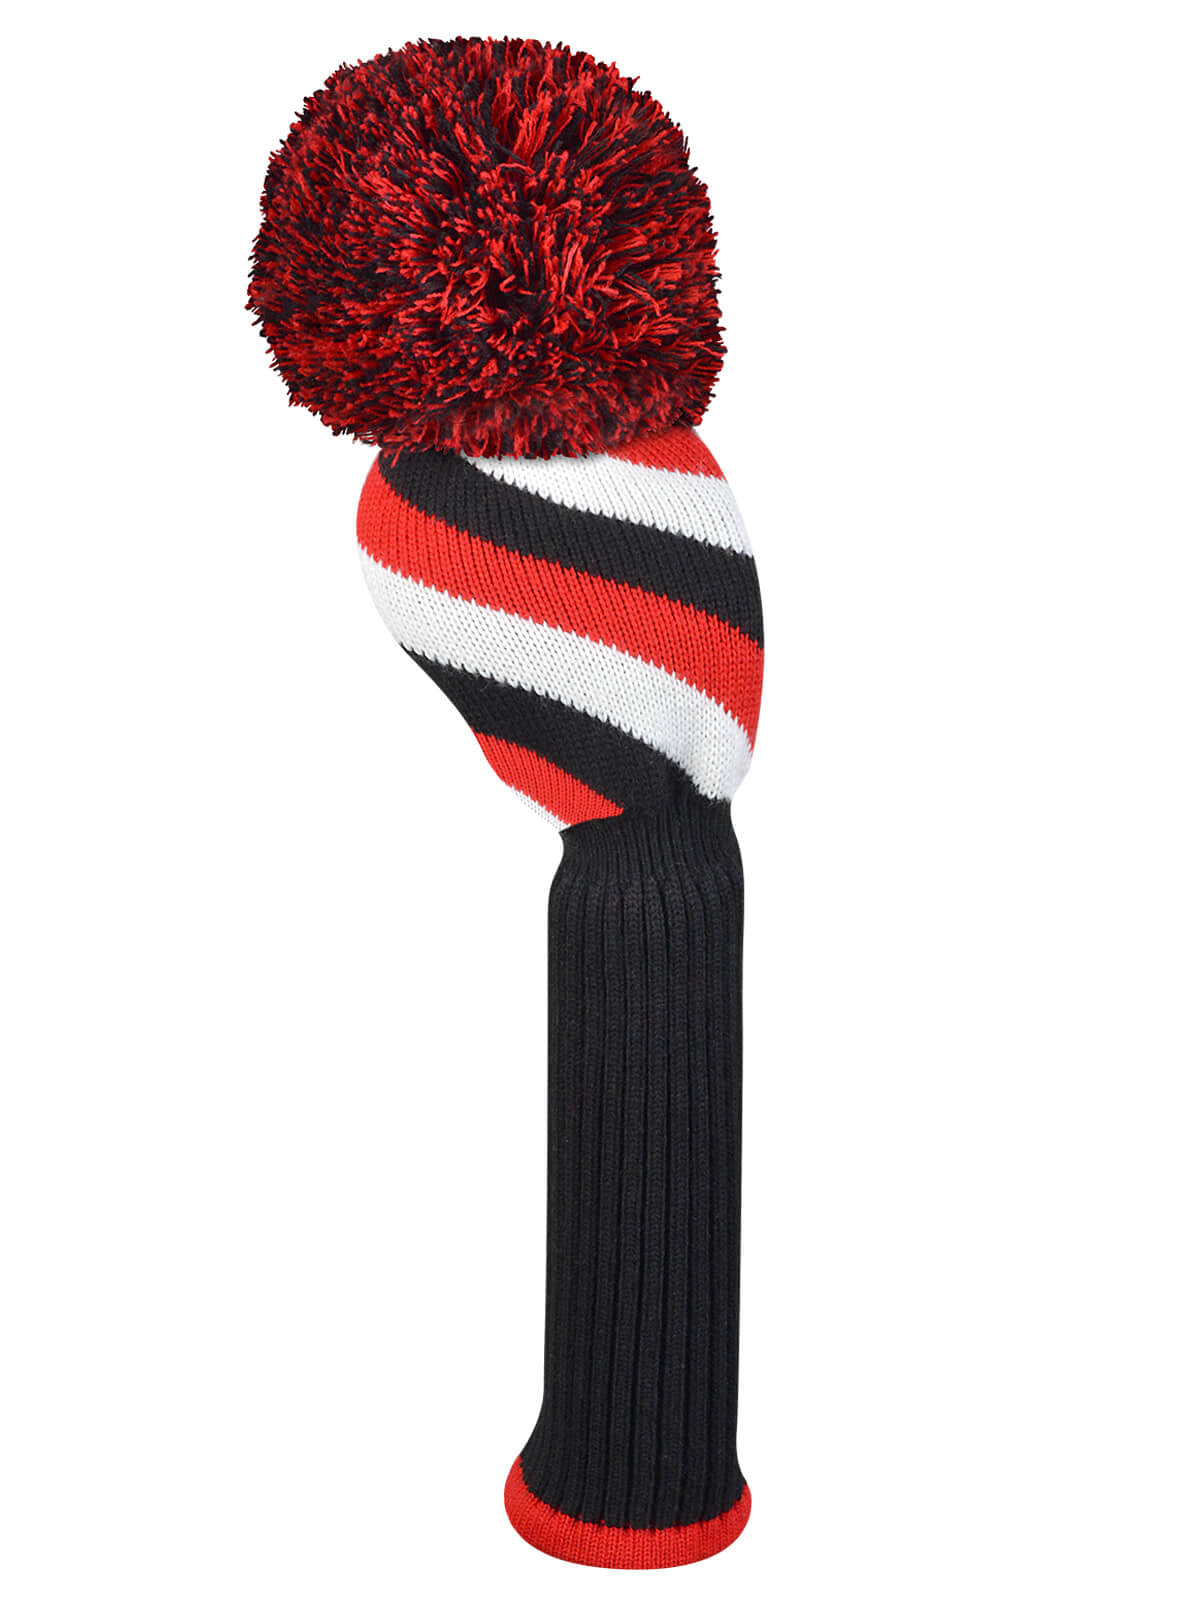 Diagonal Stripe Driver Headcover - Red, Black, & White